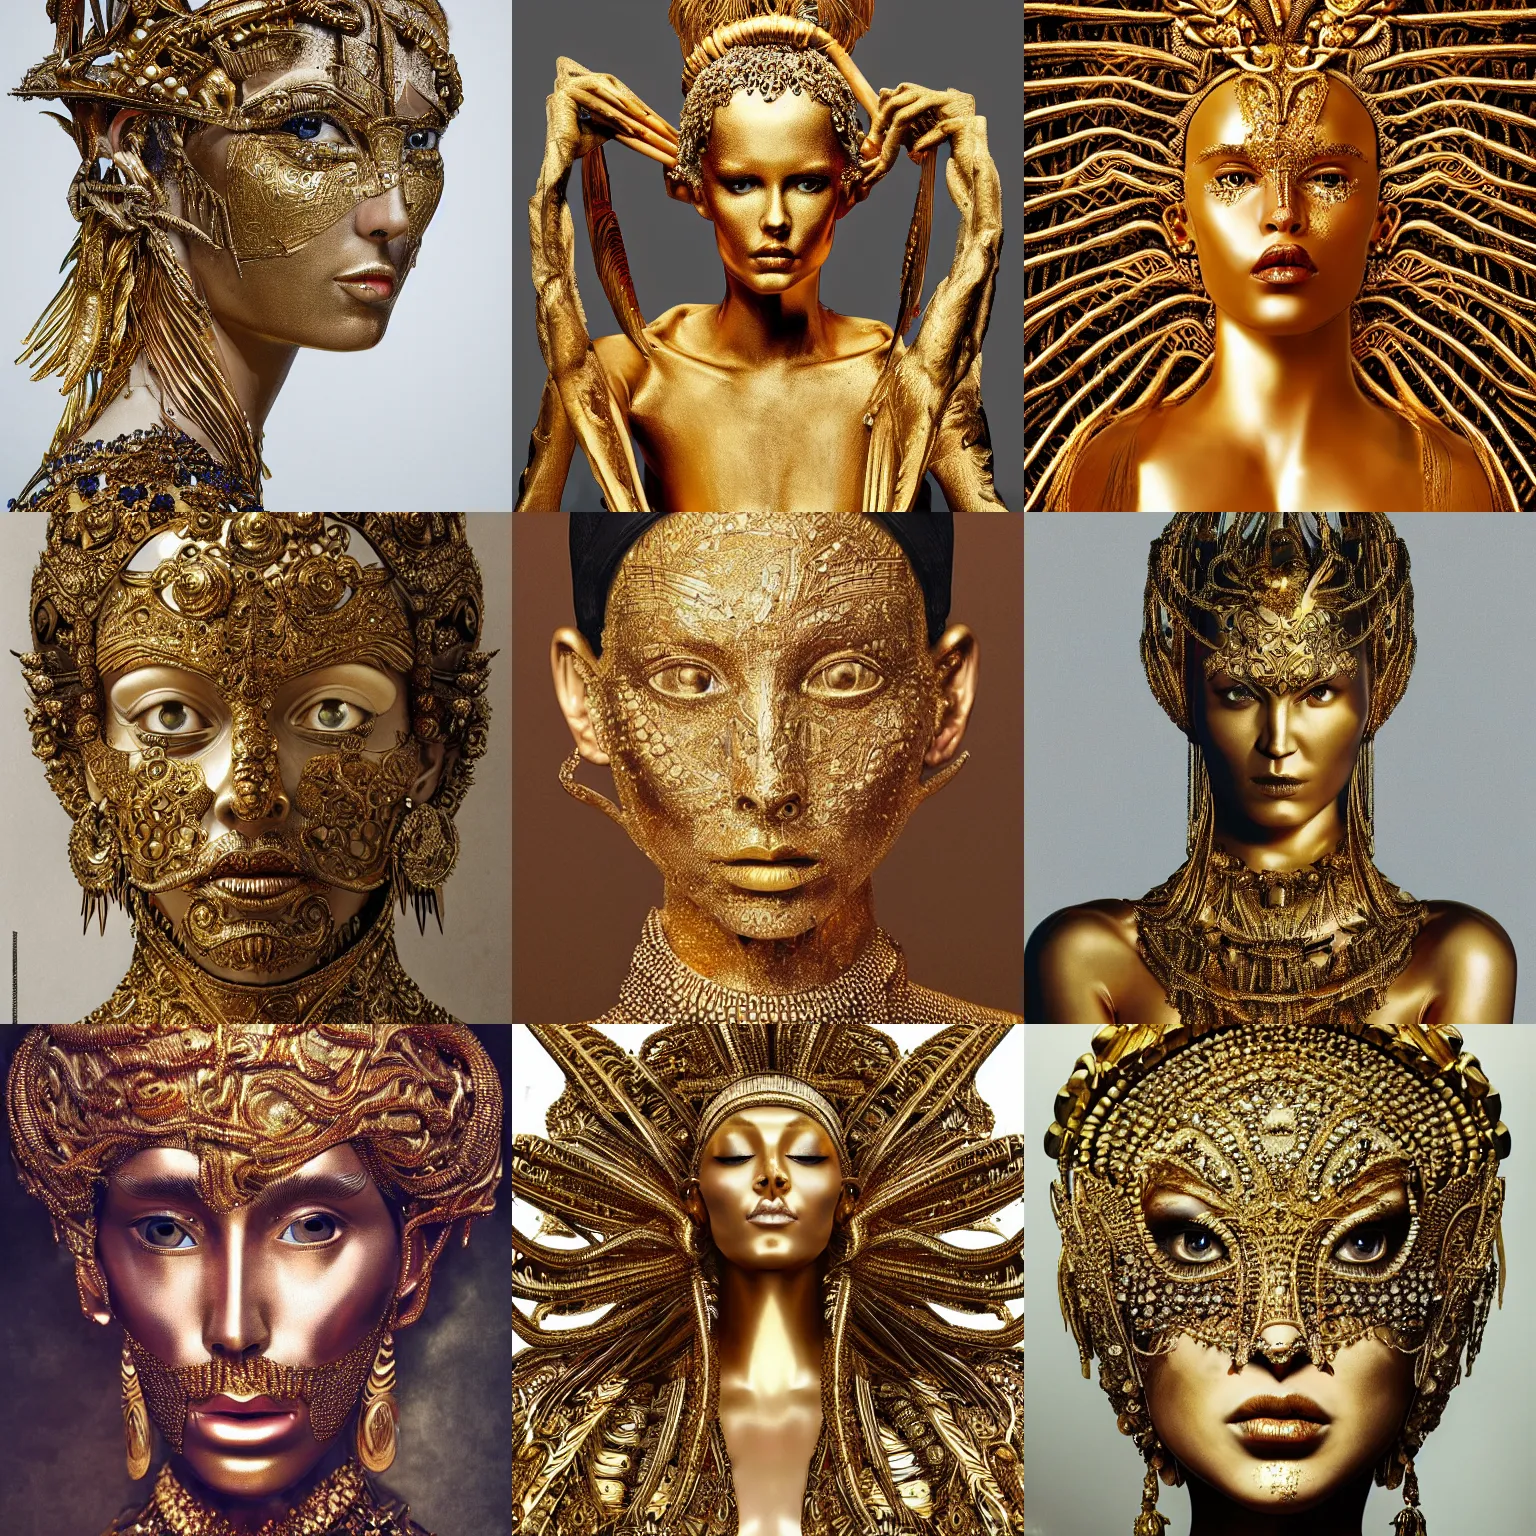 Prompt: sculpture made of gold, portrait, future, shaman, gold, close up, harper's bazaar, vogue, magazine, insanely detailed and intricate, concept art, ornate, luxury, elite, elegant